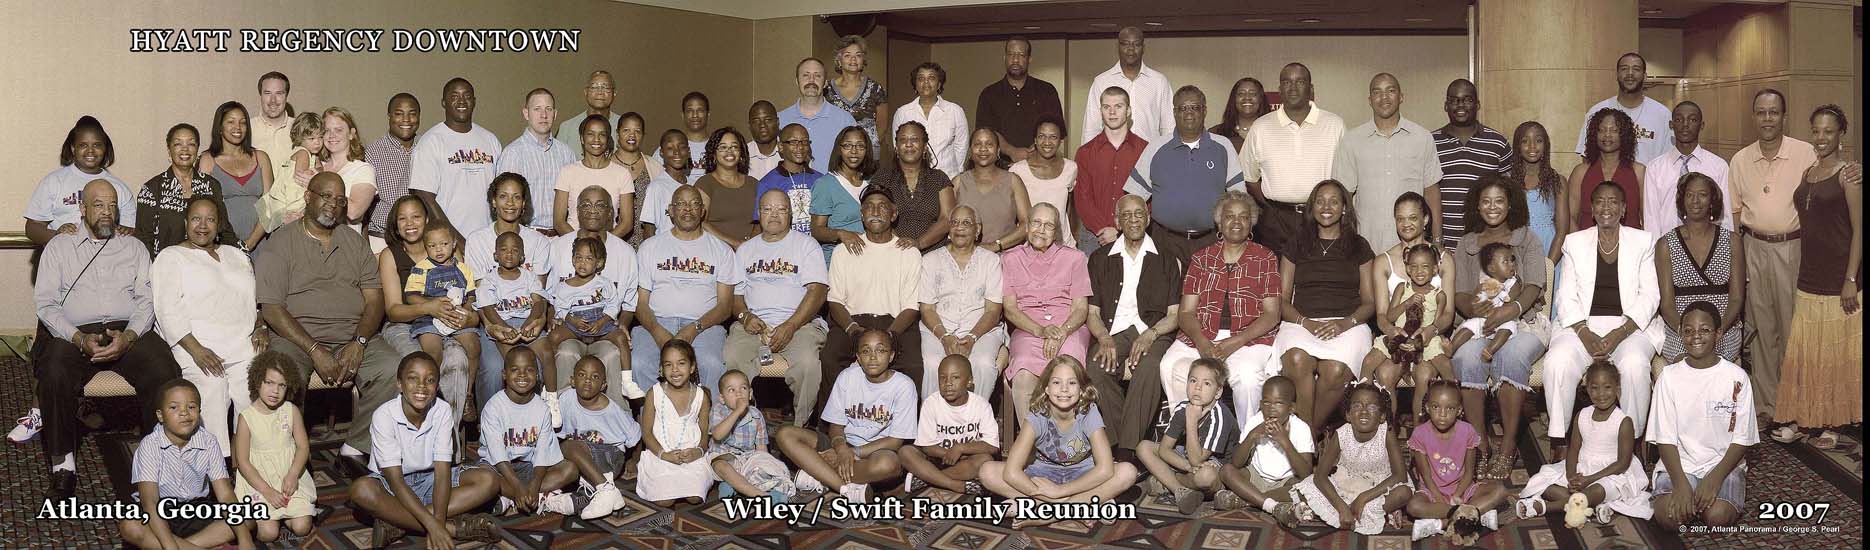 Wiley_Family_Reunion_Photograph